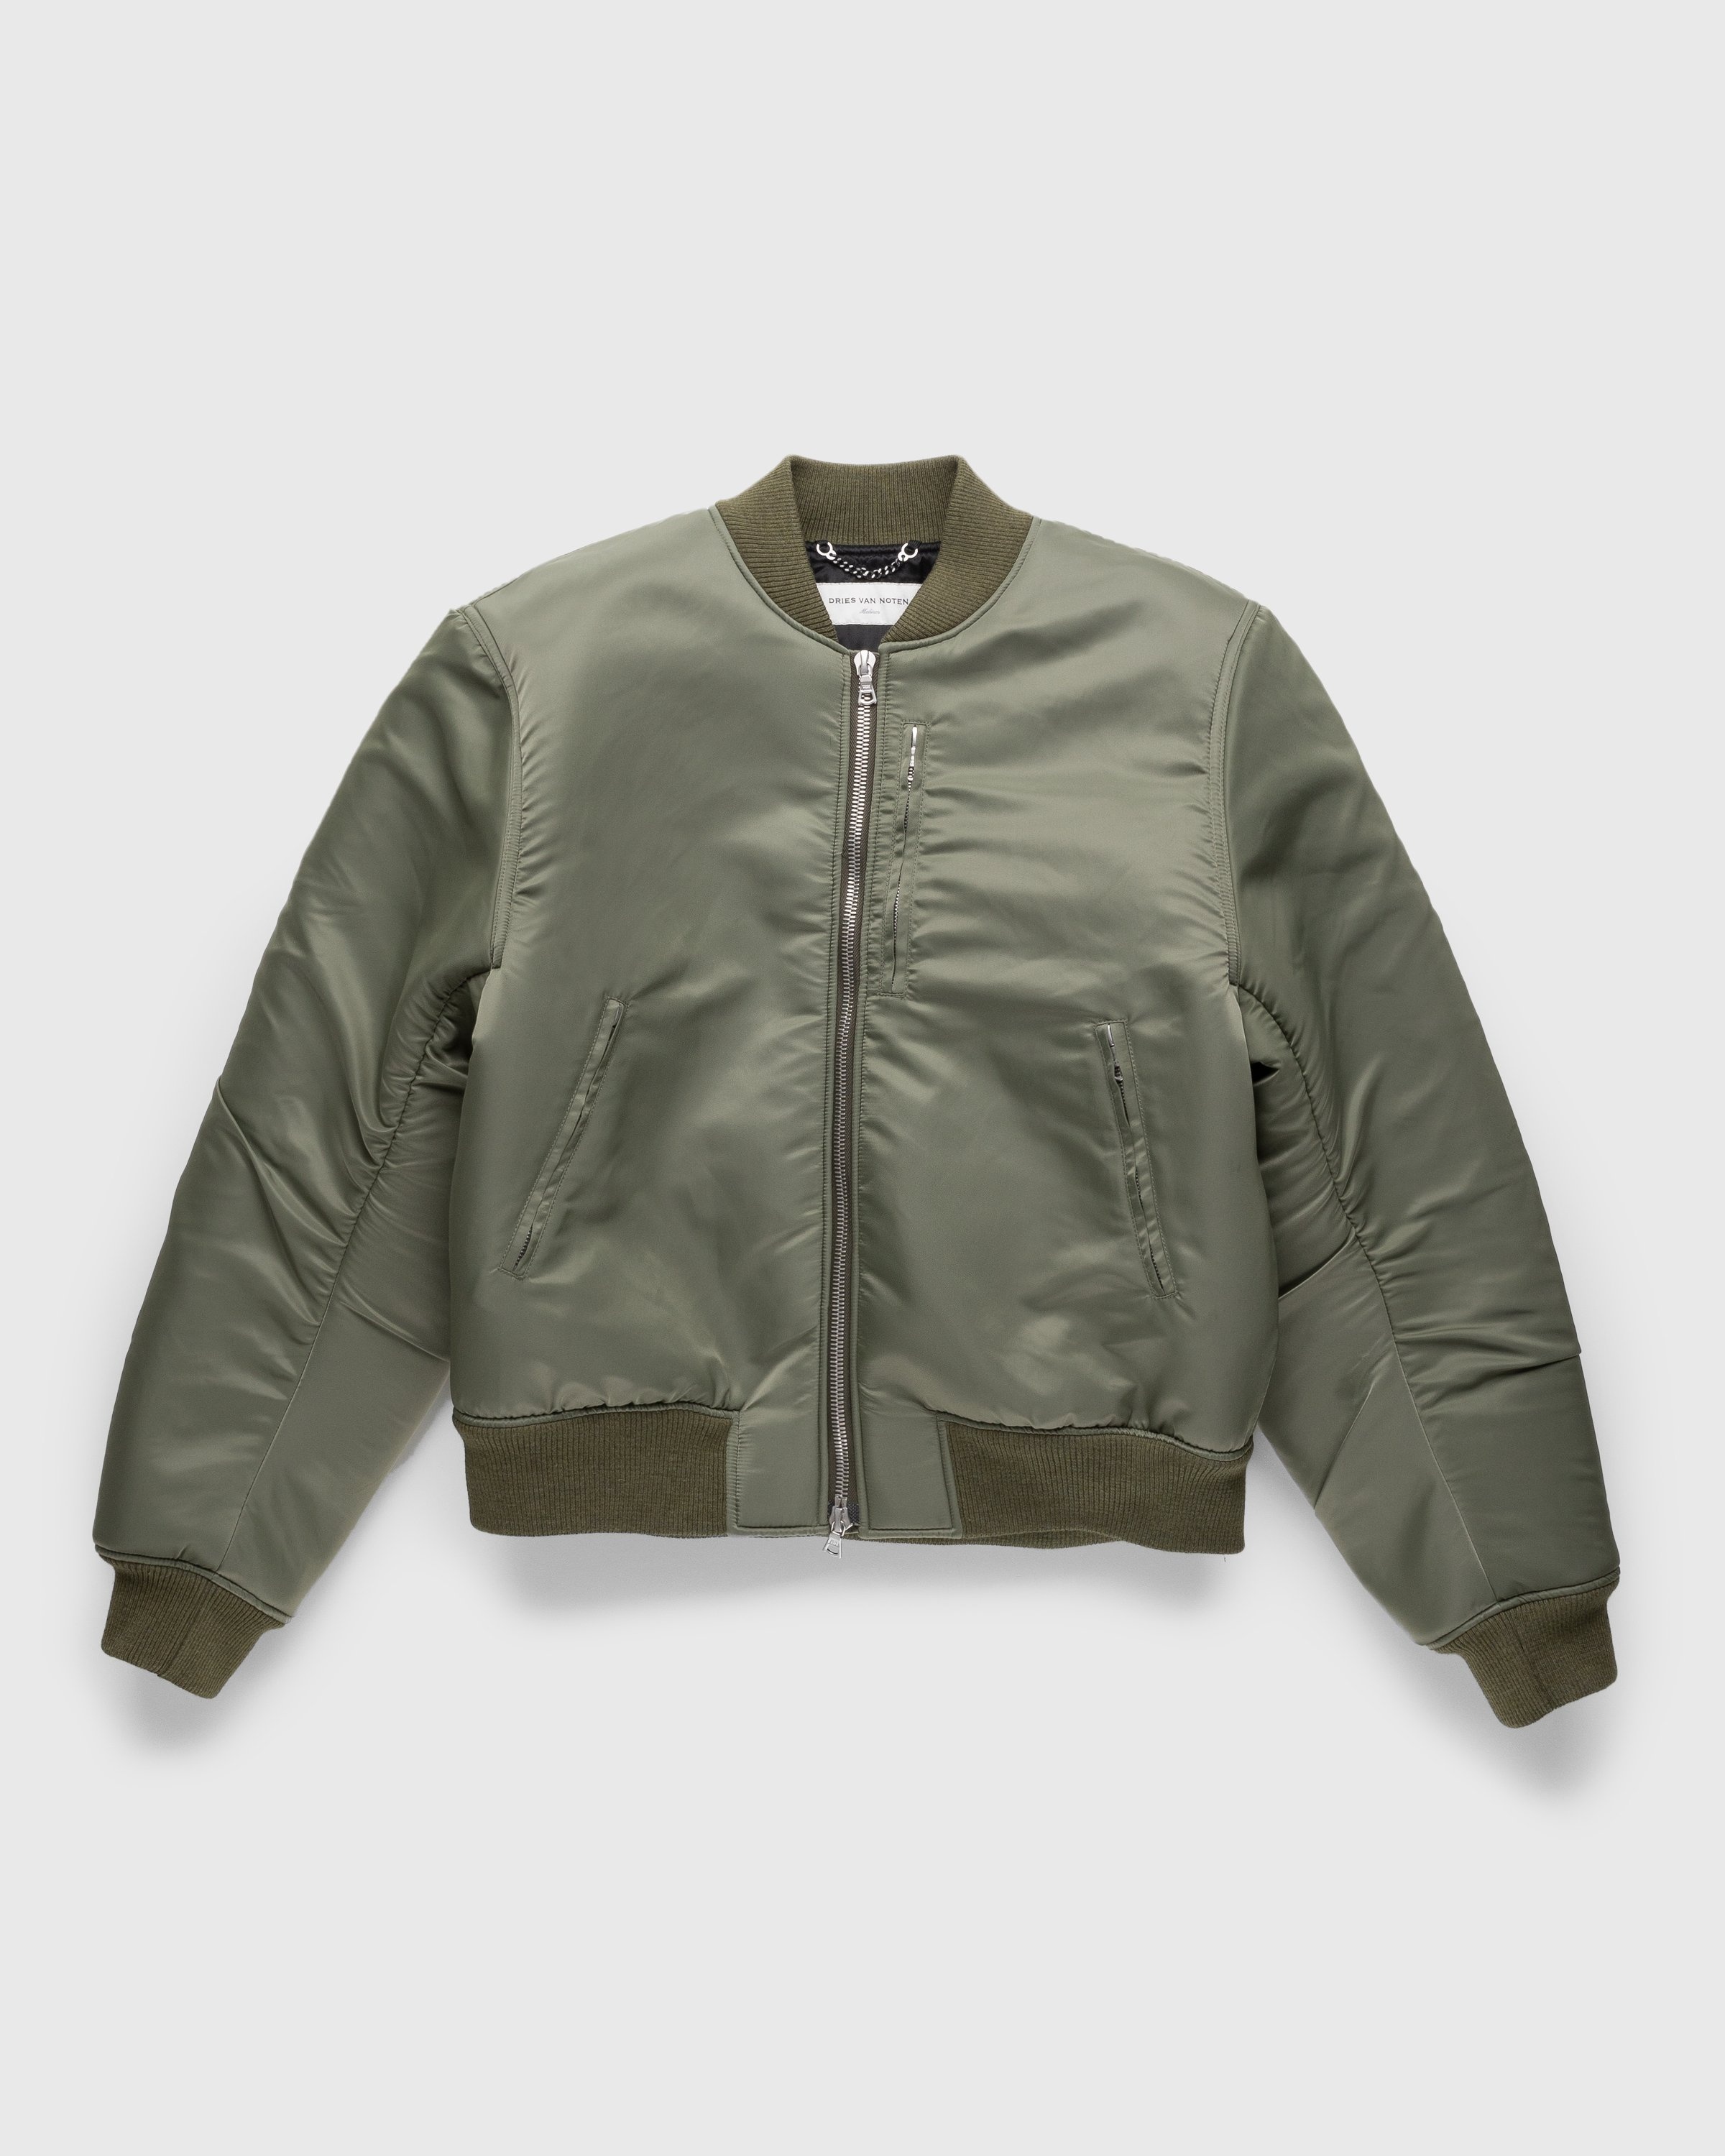 Dries van Noten – Verso Bomber Jacket Green - Outerwear - Green - Image 1